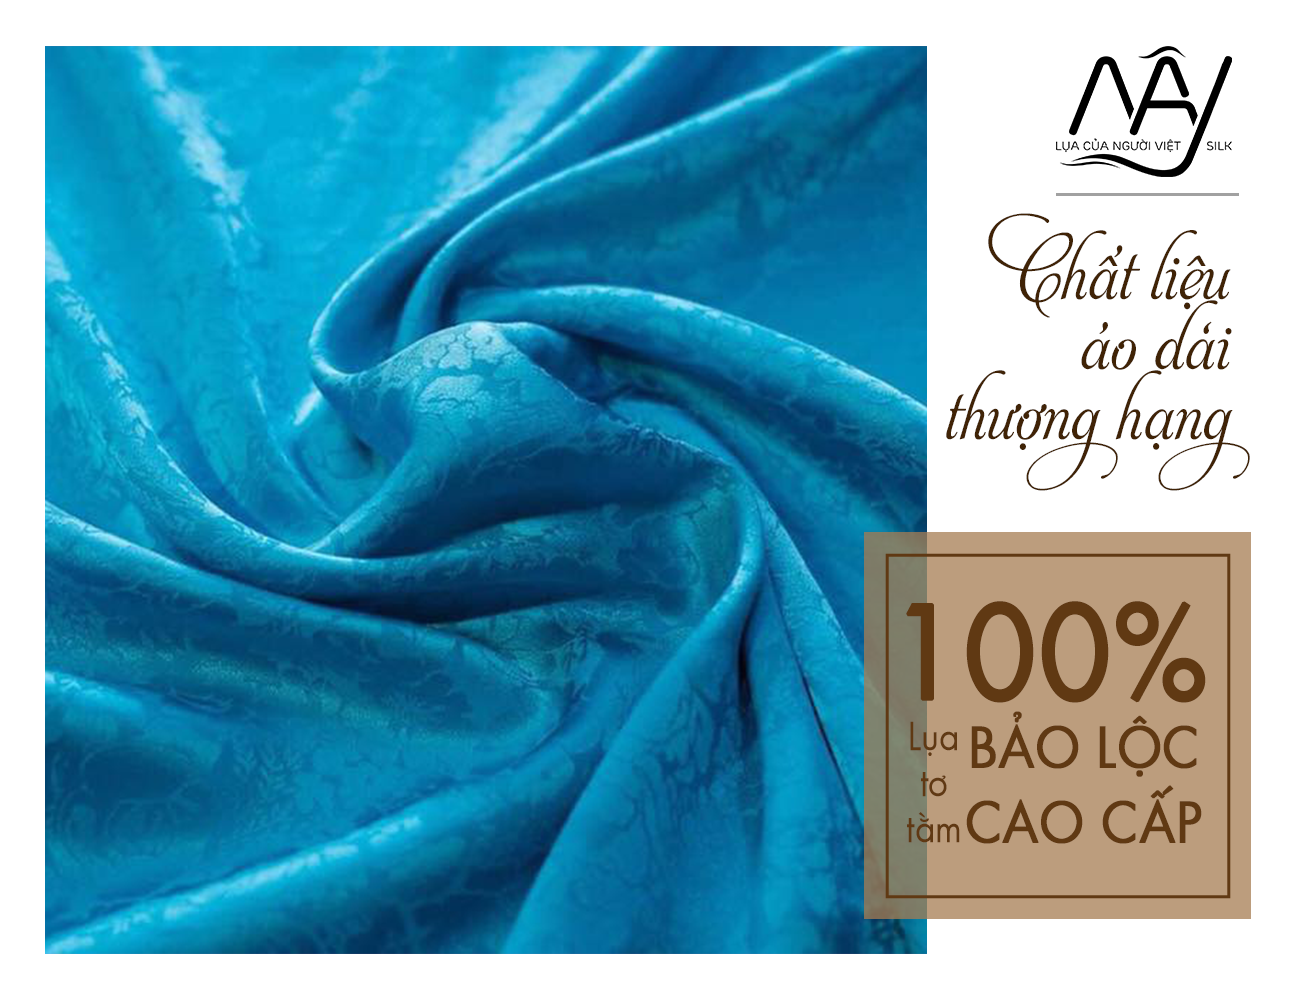 buy Bao loc silk fabric in Hanoi